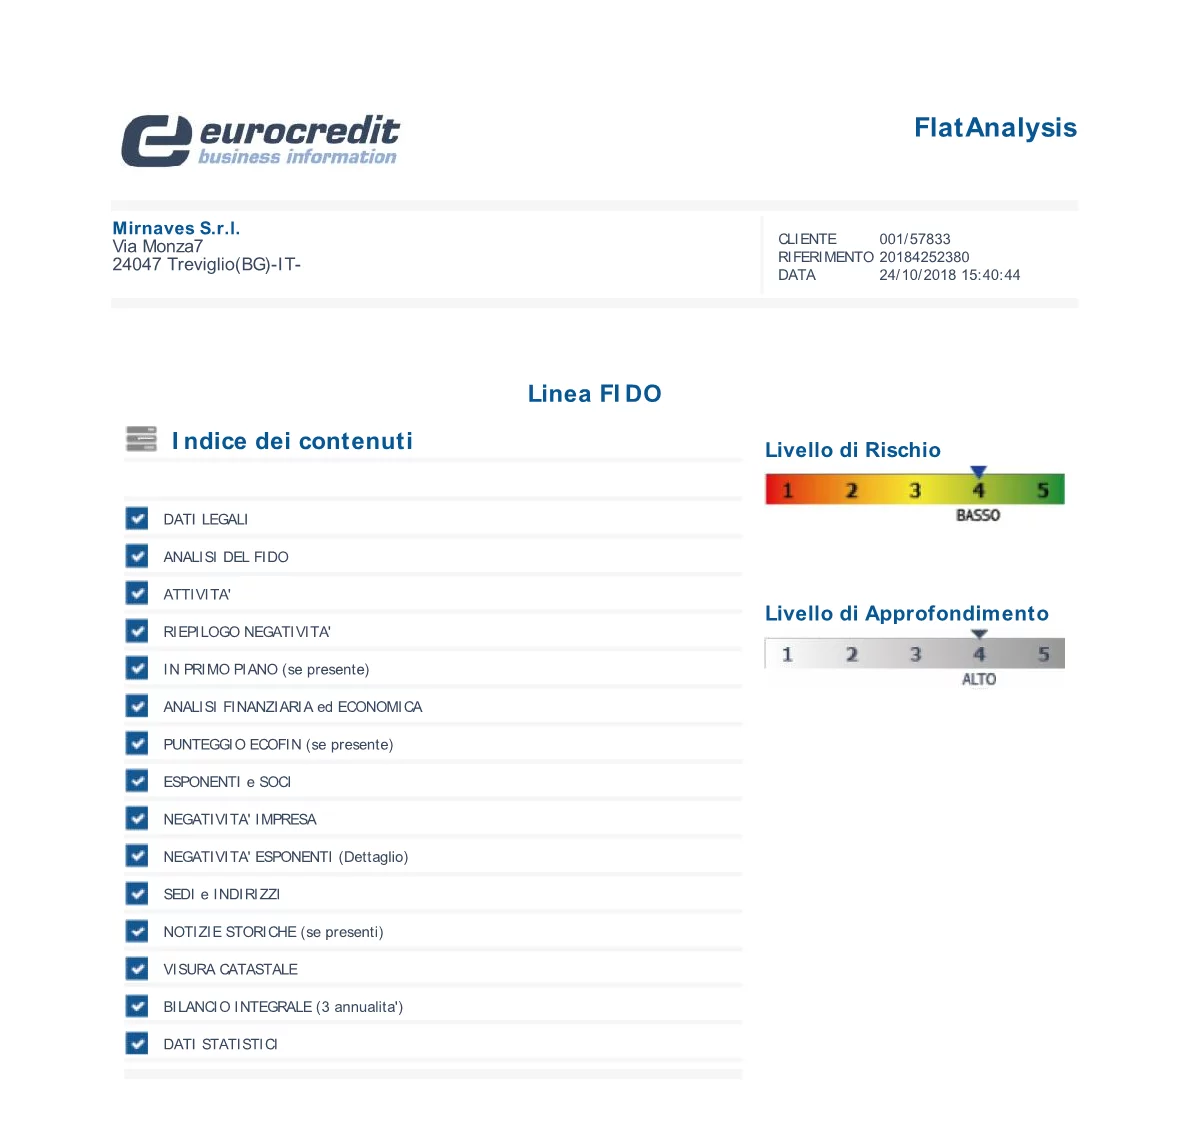 Prova il report FLATANALYSIS di Eurocredit